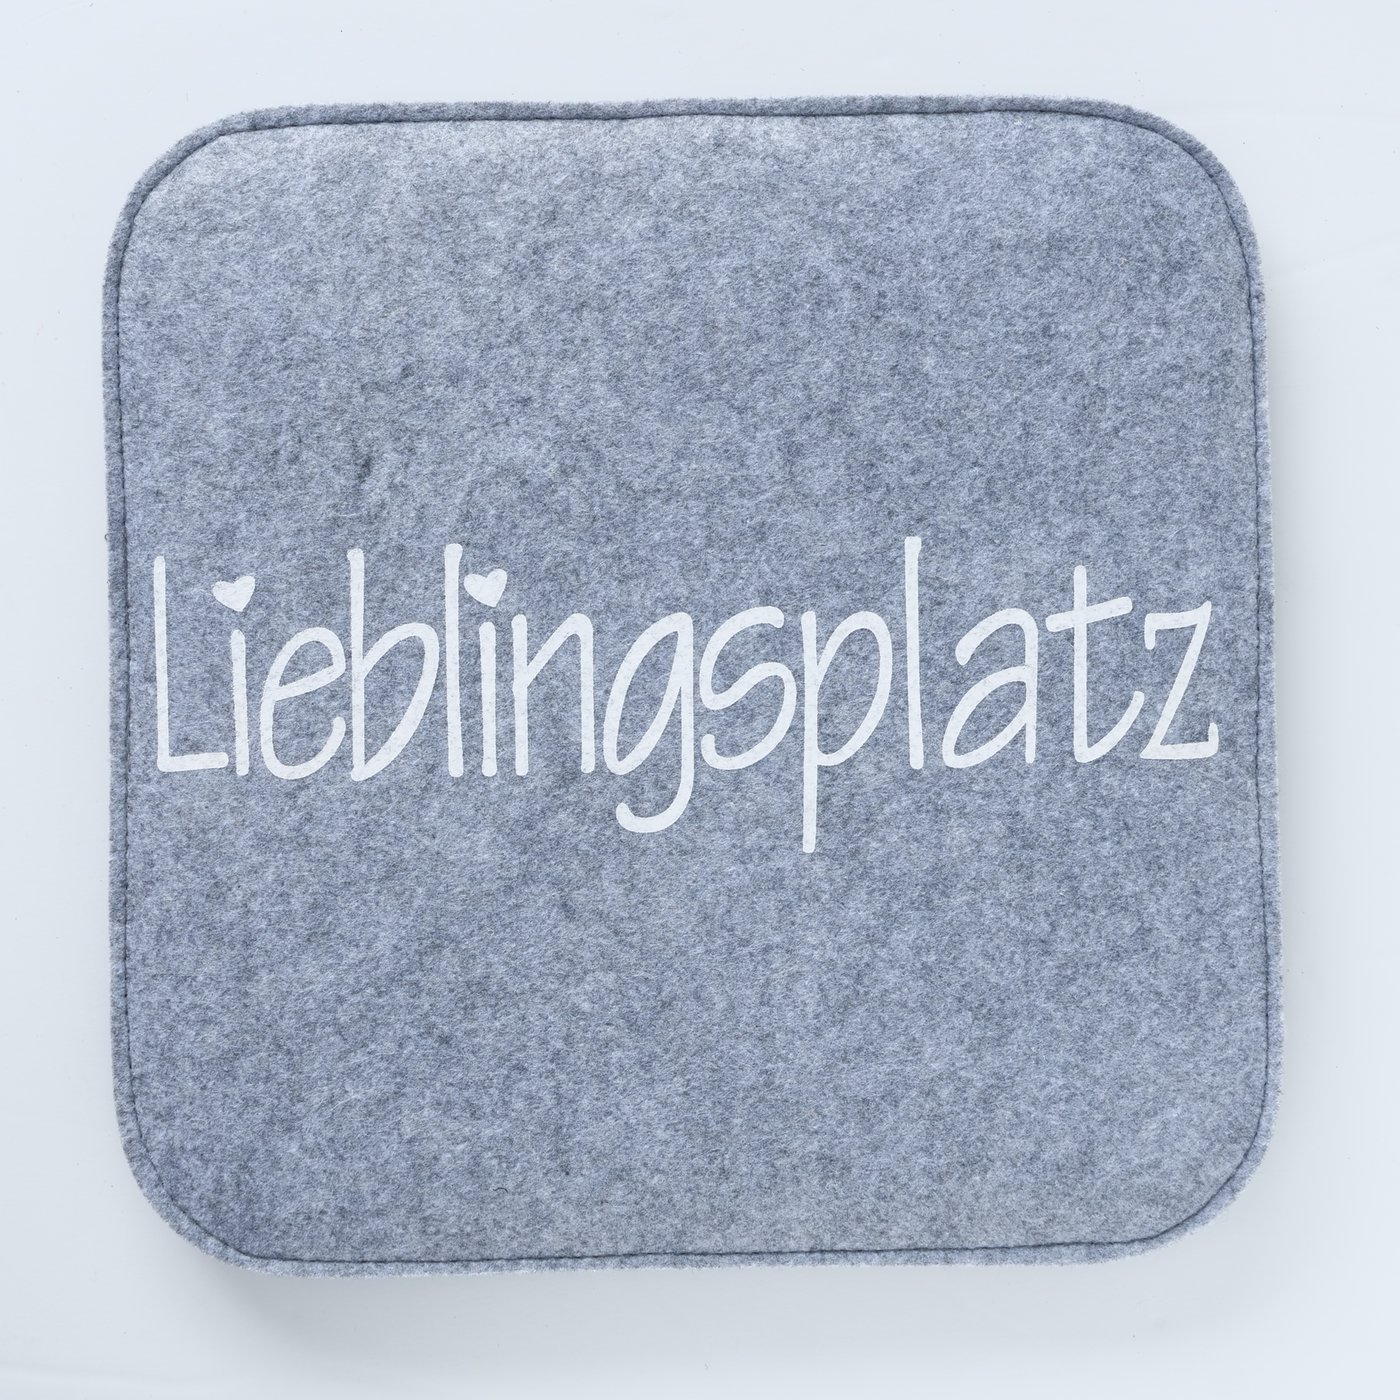 Filz Sitzkissen Stuhlkissen "Lieblingsplatz" anthrazit grau, 2006223, 4020607808928